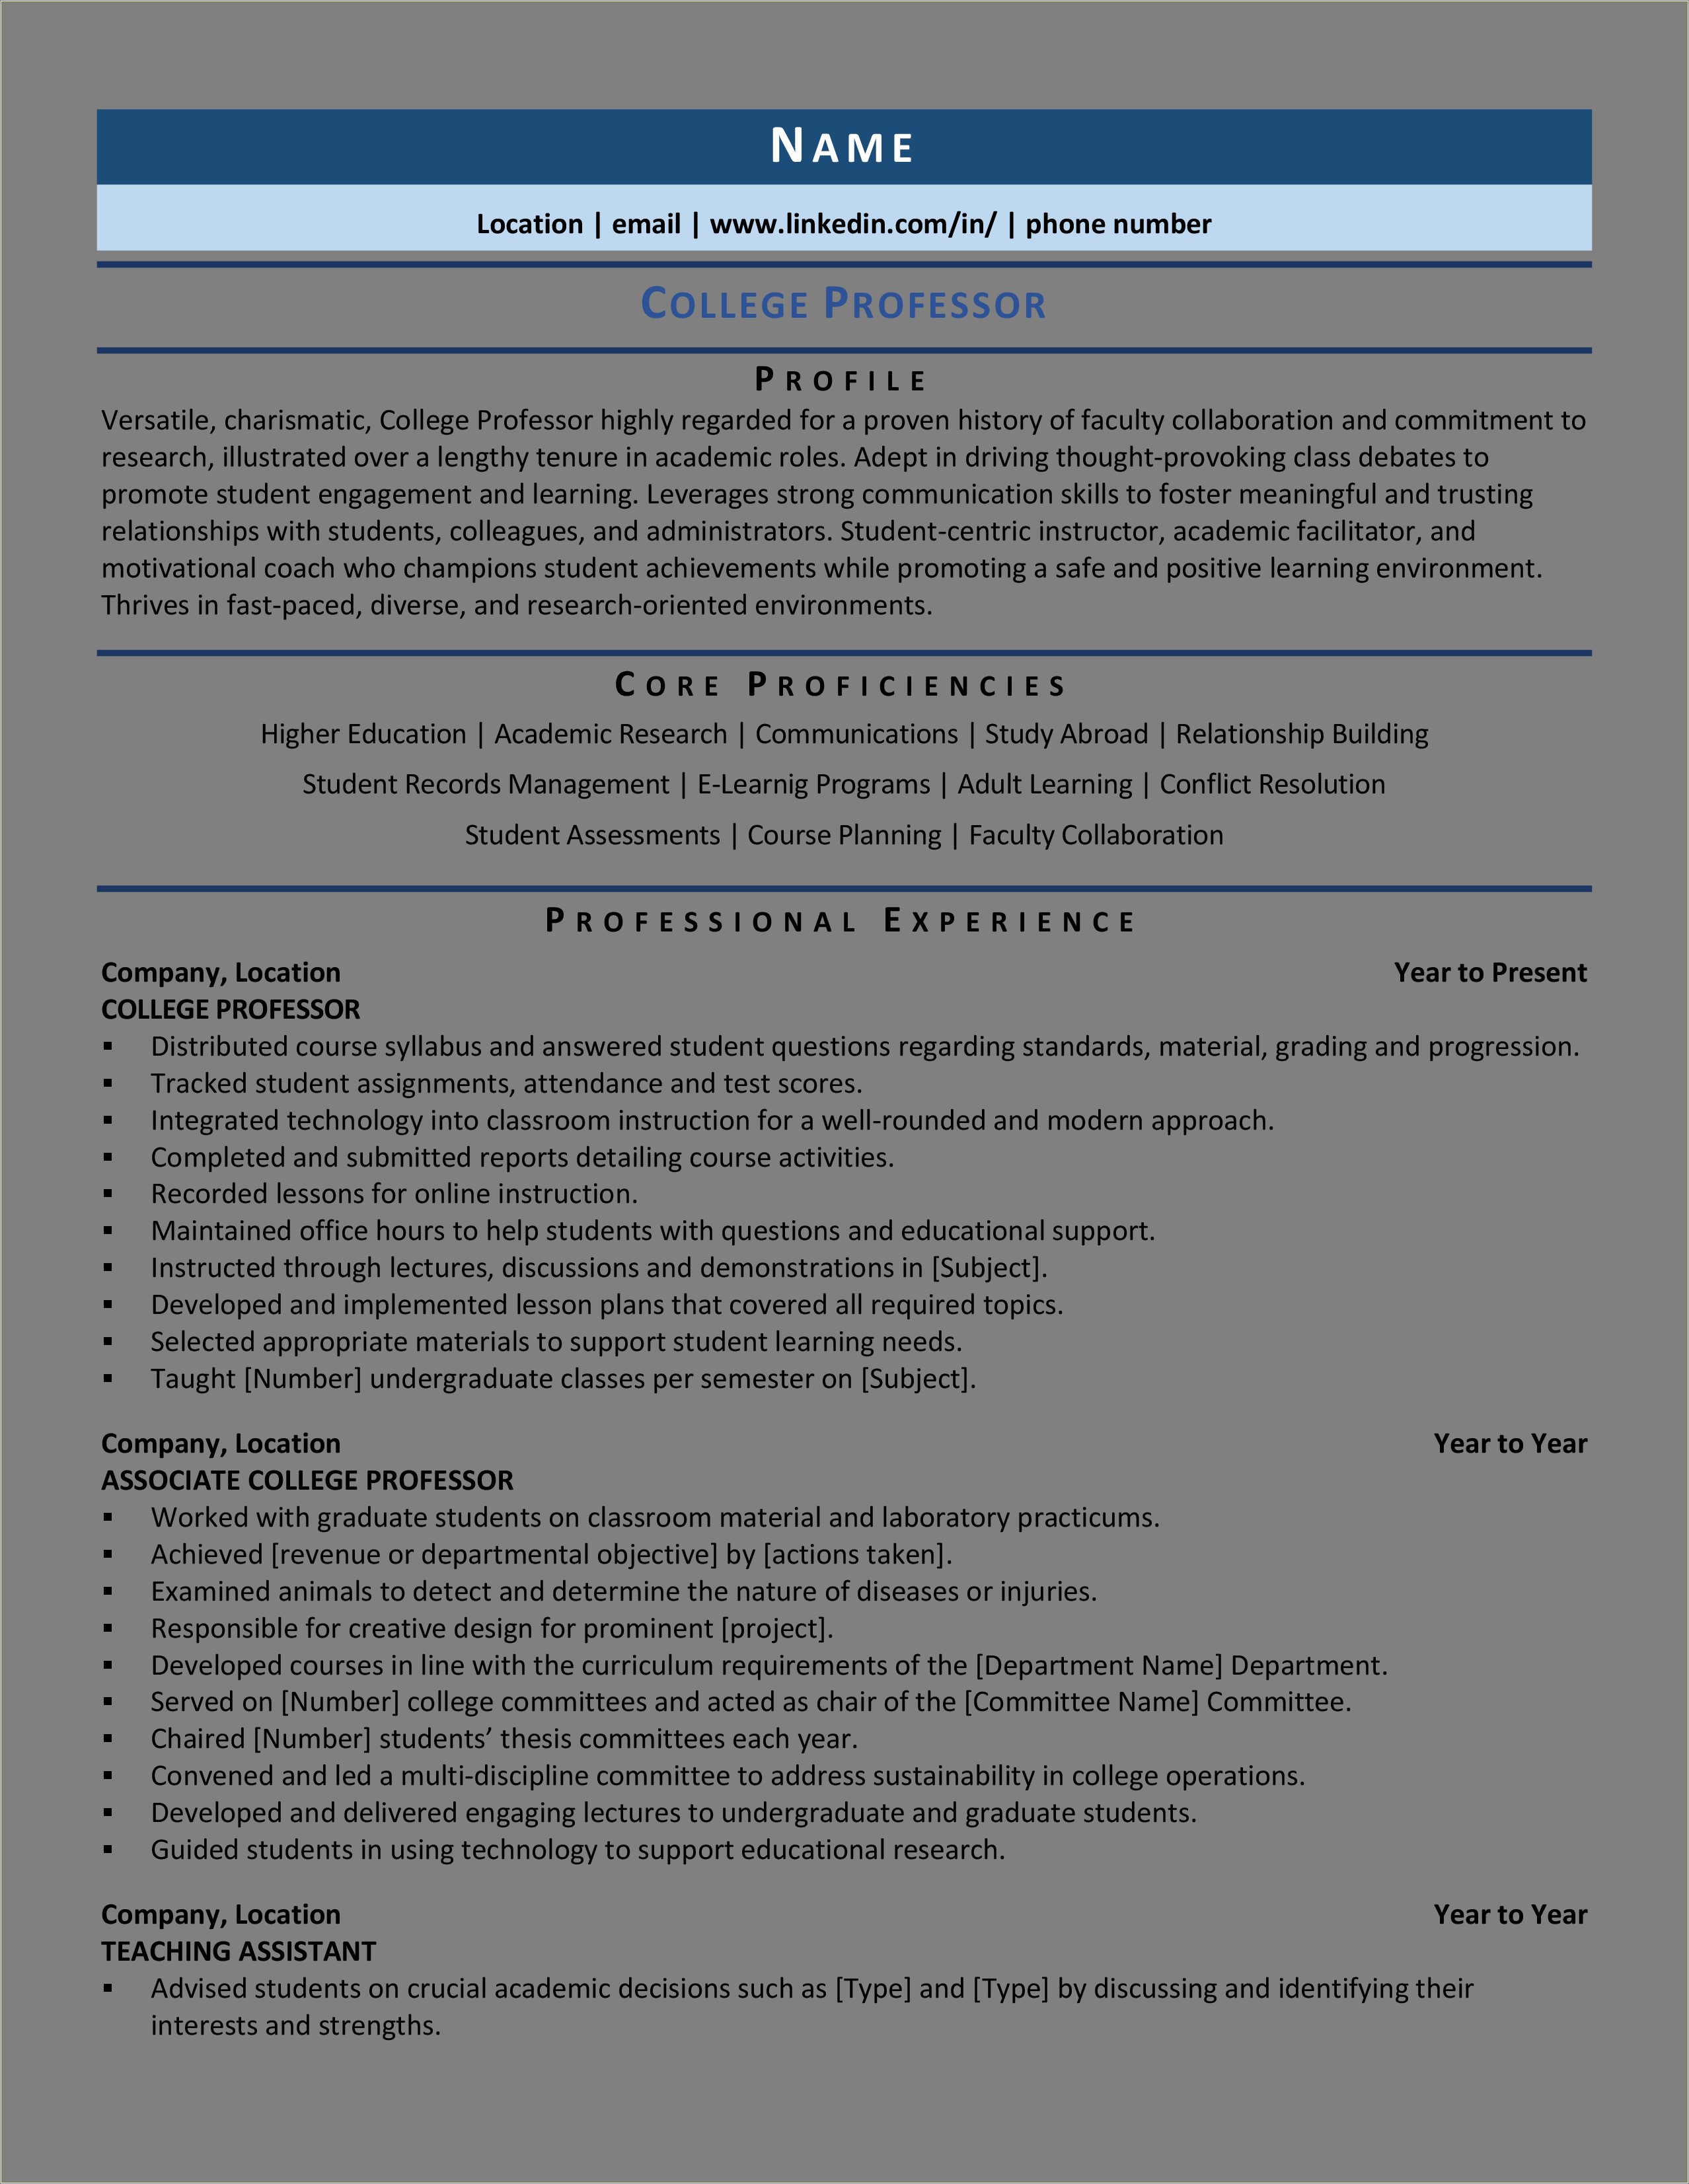 Sample Resume For Higher Education Position